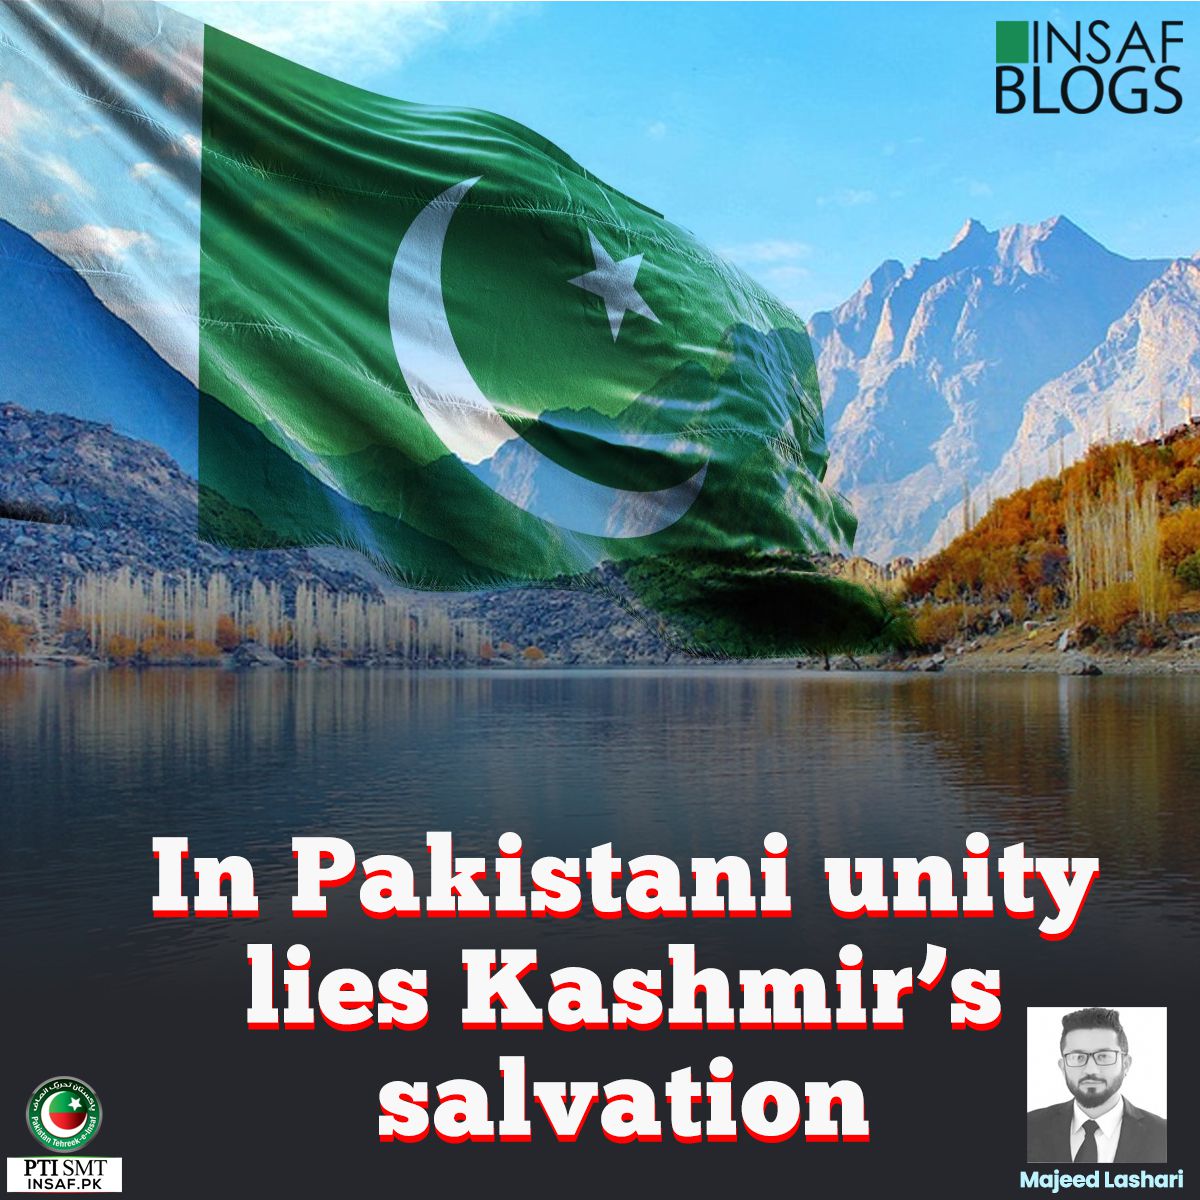 In Pakistani unity lies Kashmir’s salvation